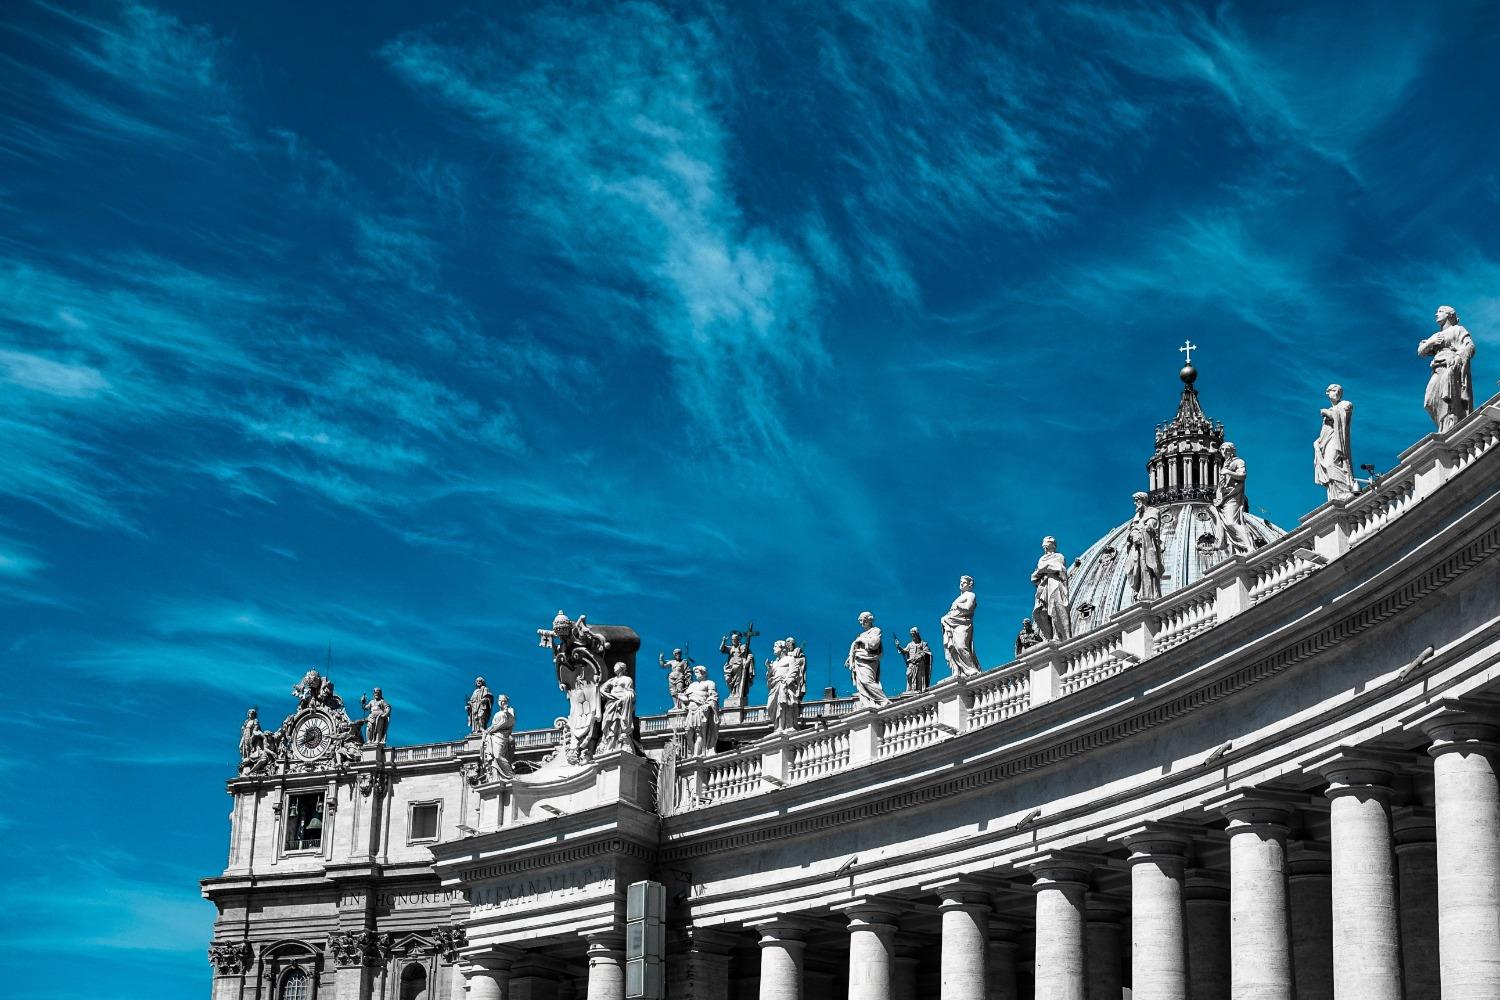 Colonnade of St. Peter's, Vatican